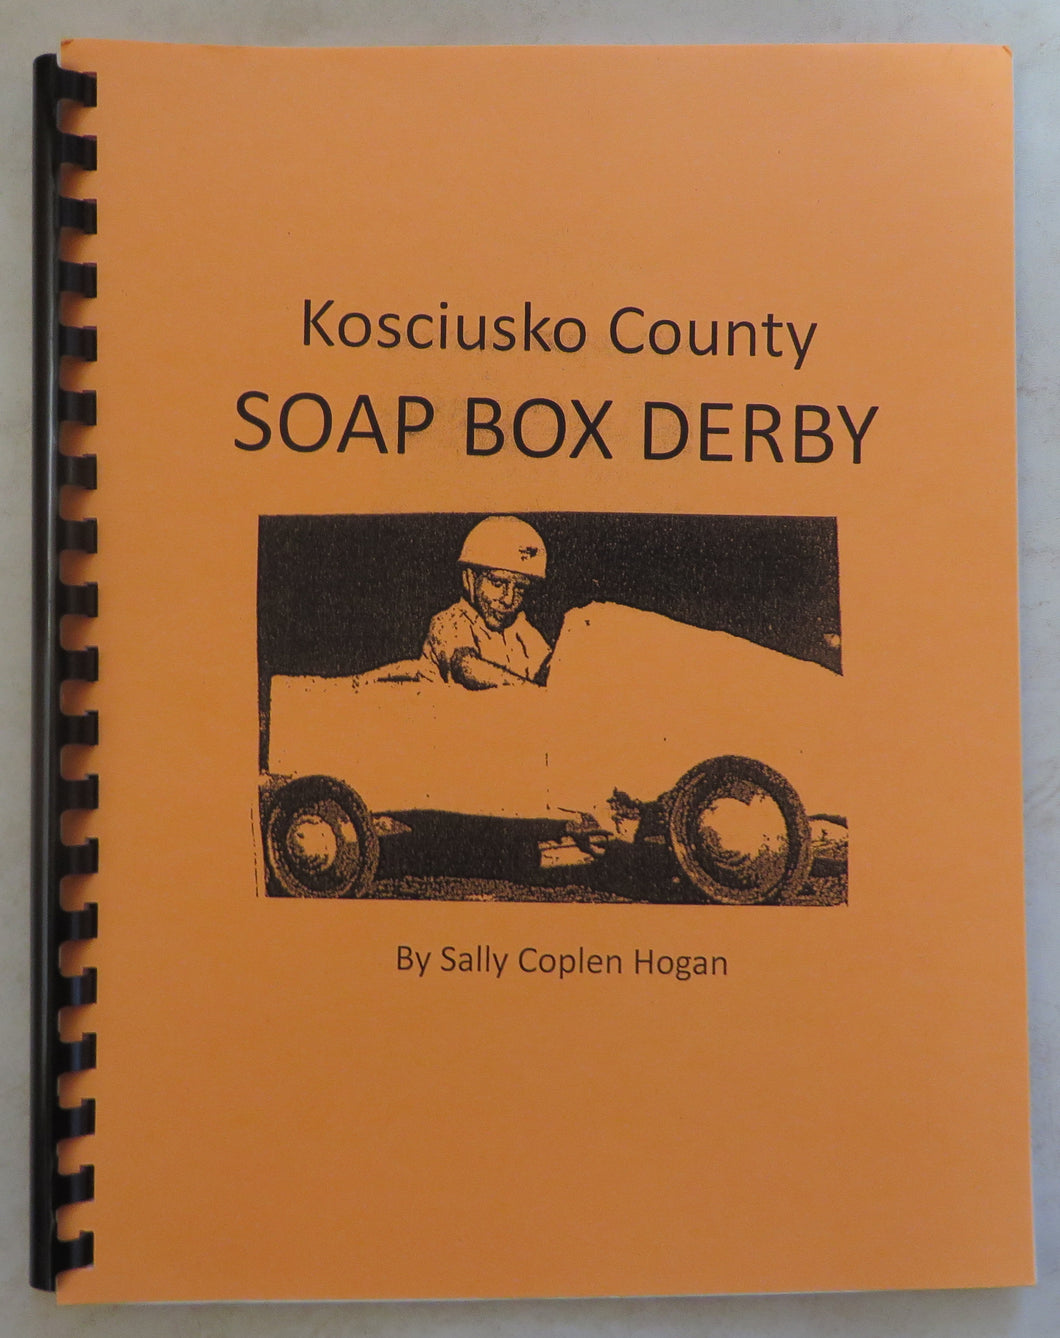 Kosciusko County - Soap Box Derby